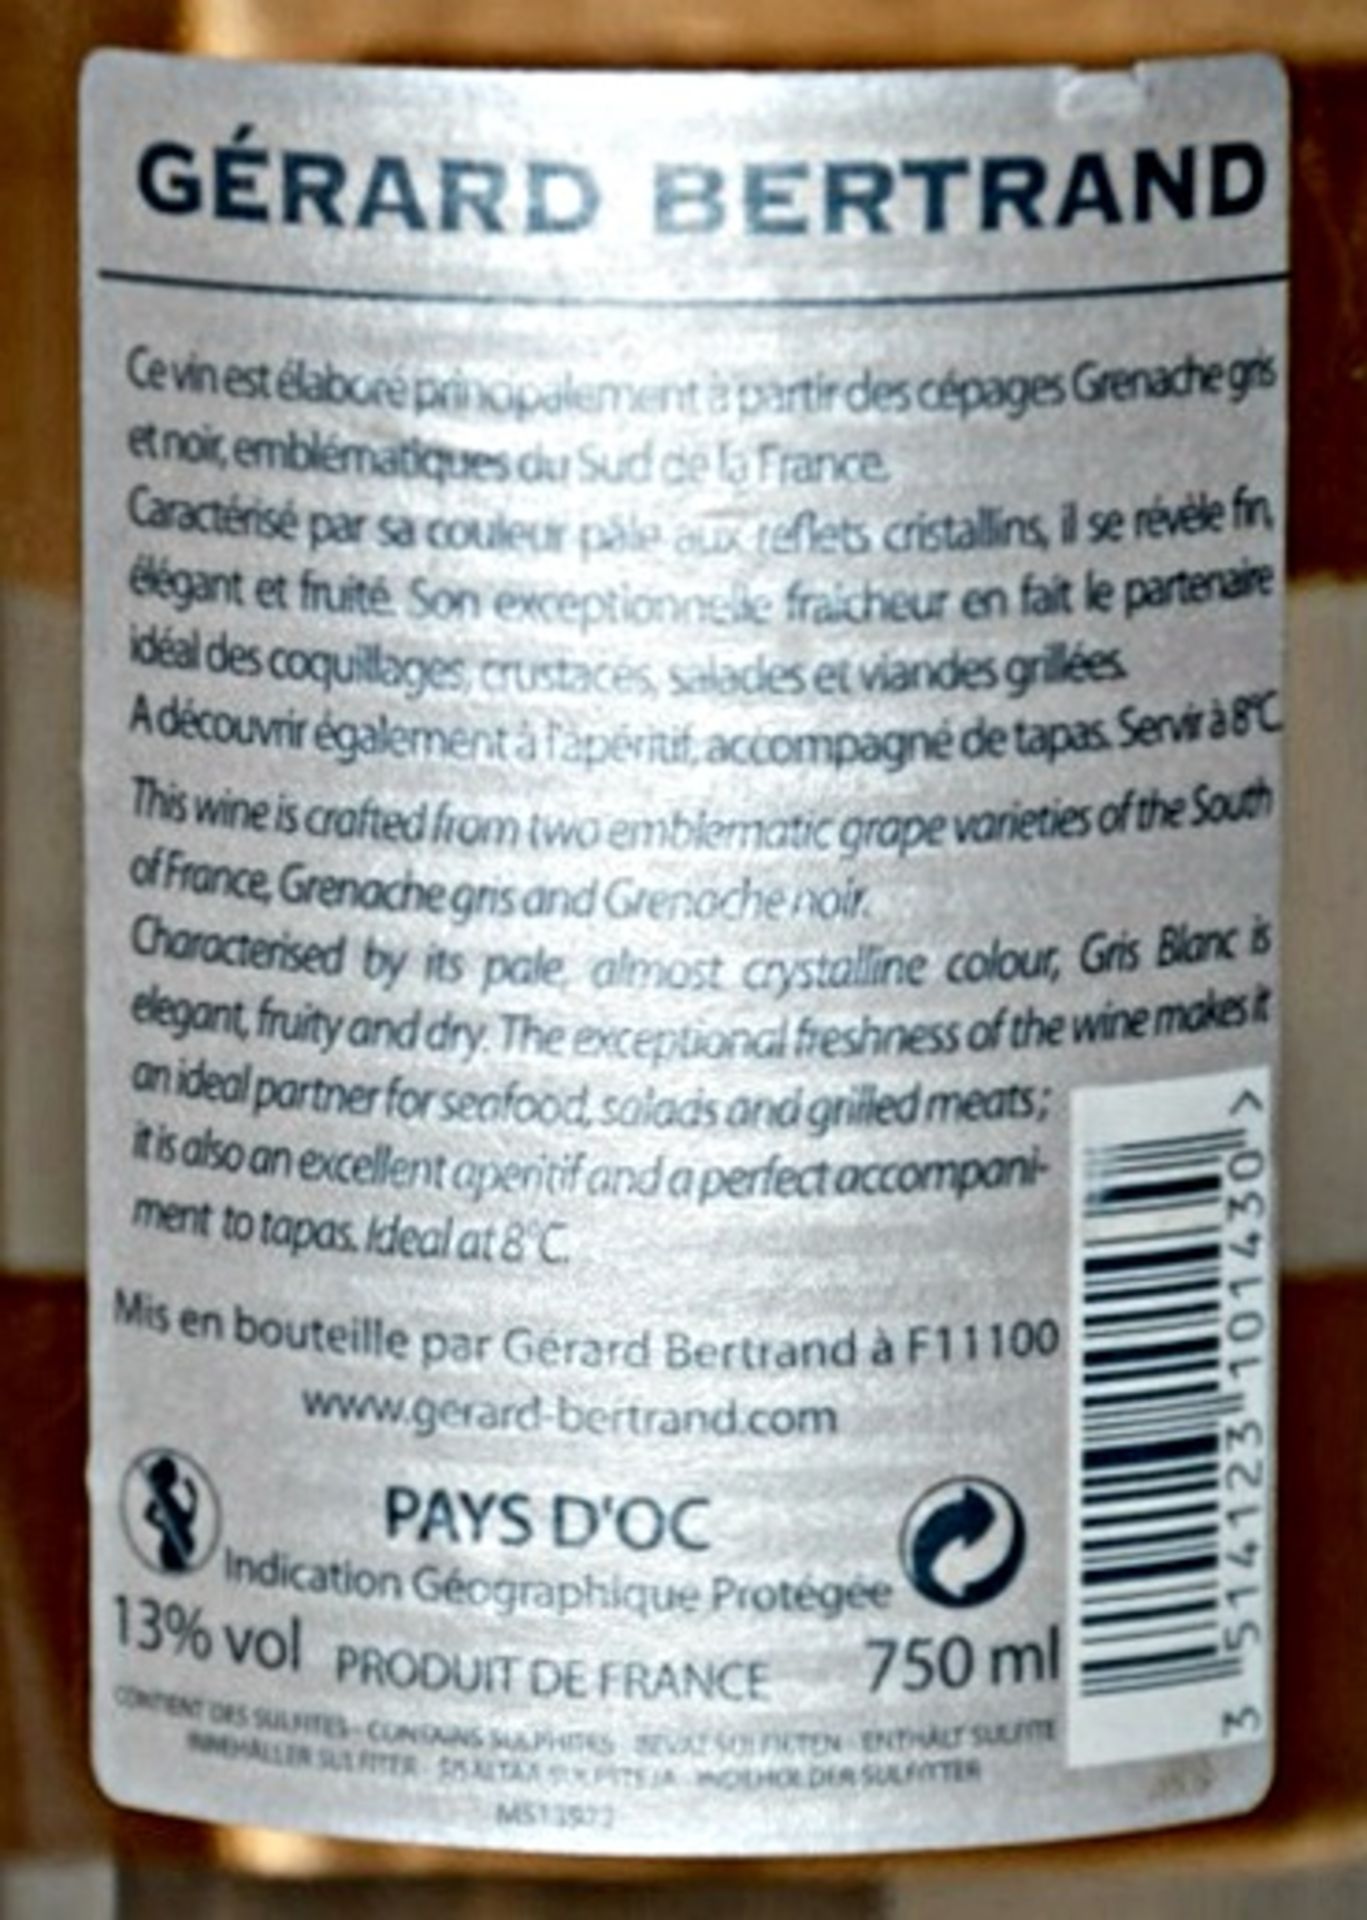 4 x 2013 Gerard Bertrand Gris Blanc, IGP Pays d'Oc, France – 2013 – Bottle Size 75cl - Volume - Image 2 of 4